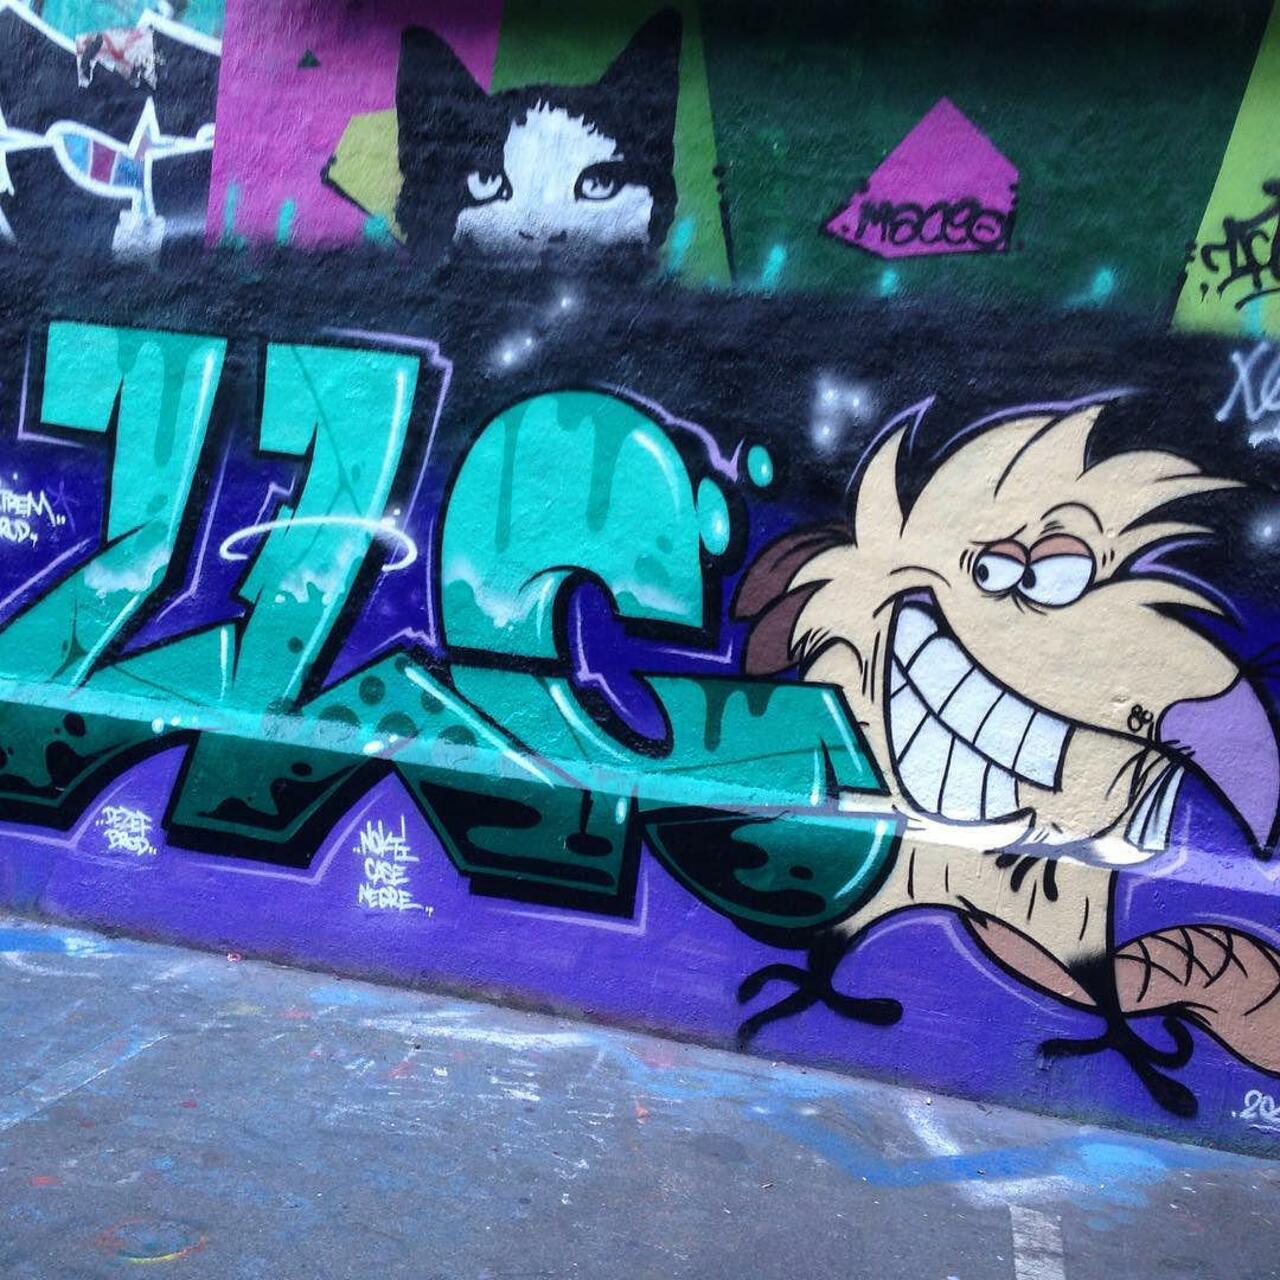 #Paris #graffiti photo by @cibti4987 http://ift.tt/1KWqszy #StreetArt http://t.co/UODqU9ErNm